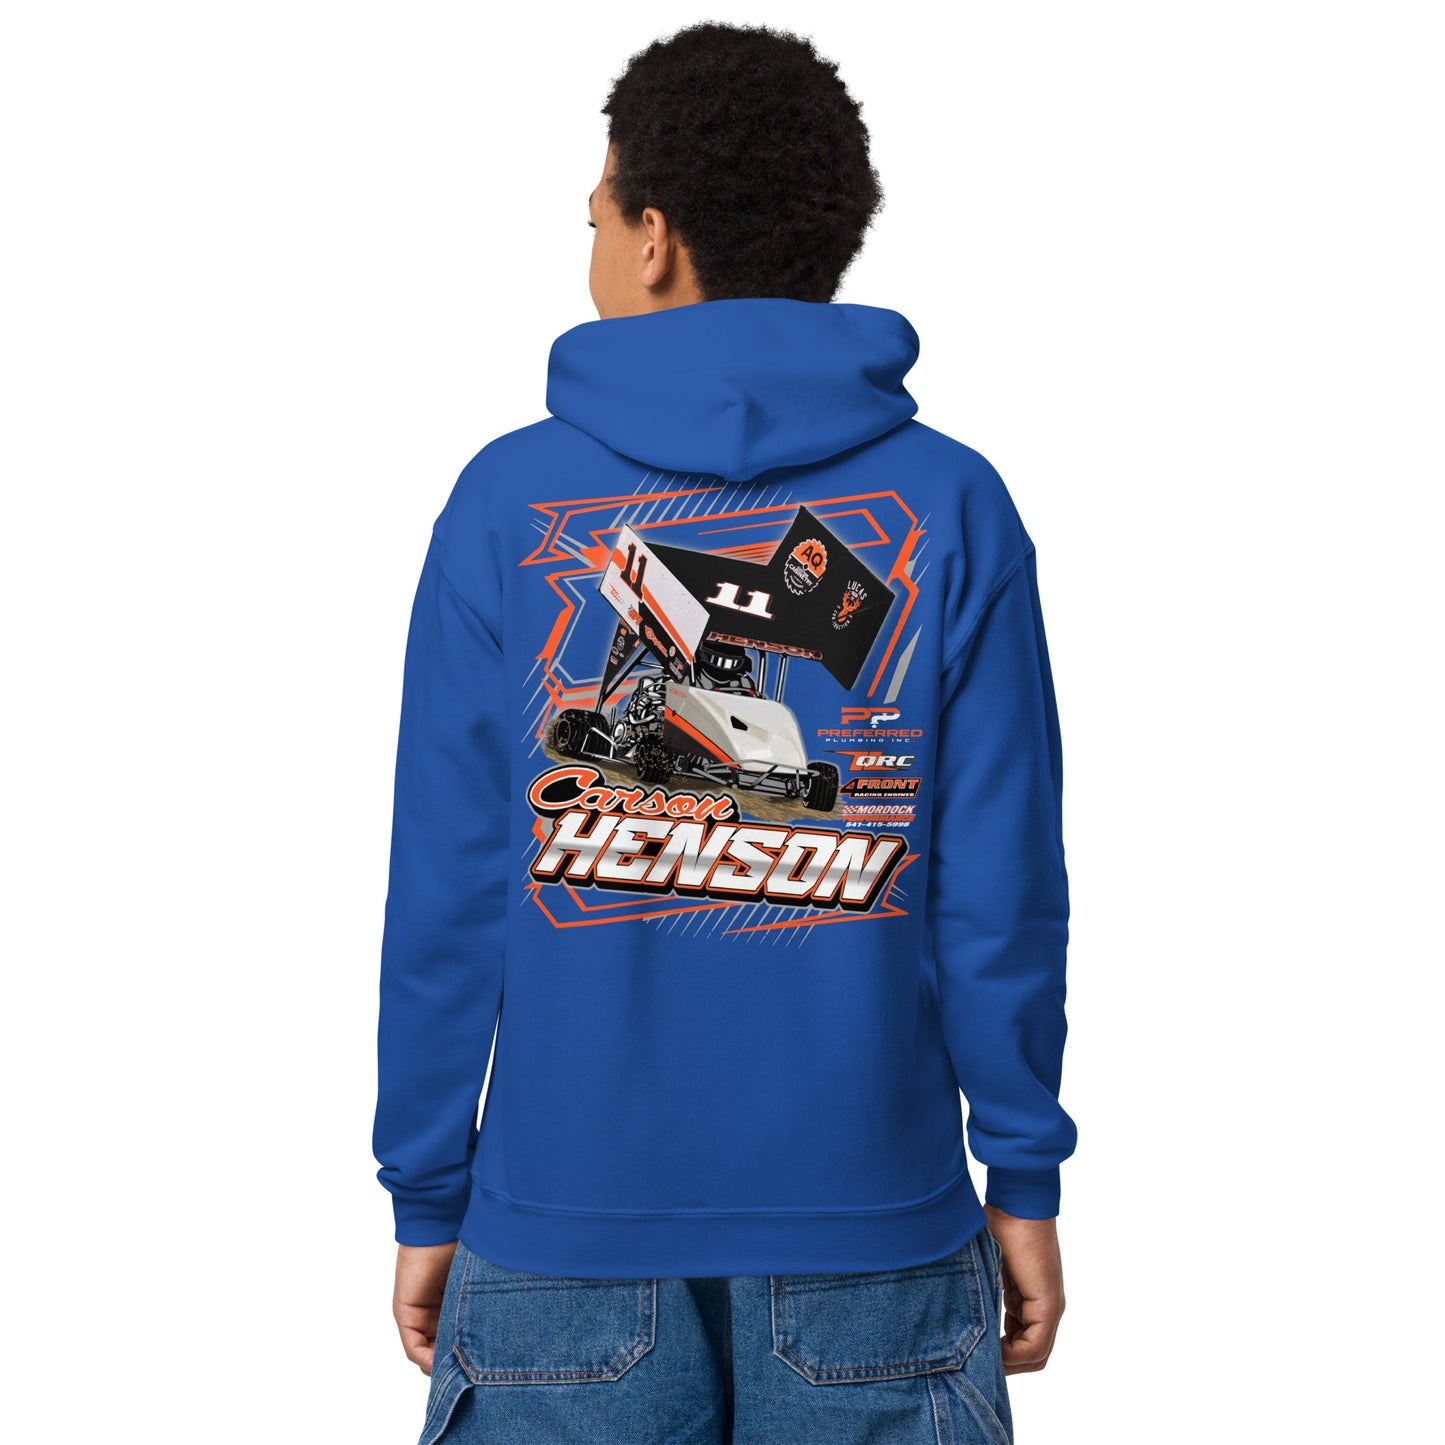 Carson Henson Kids Hoodie Sweatshirt